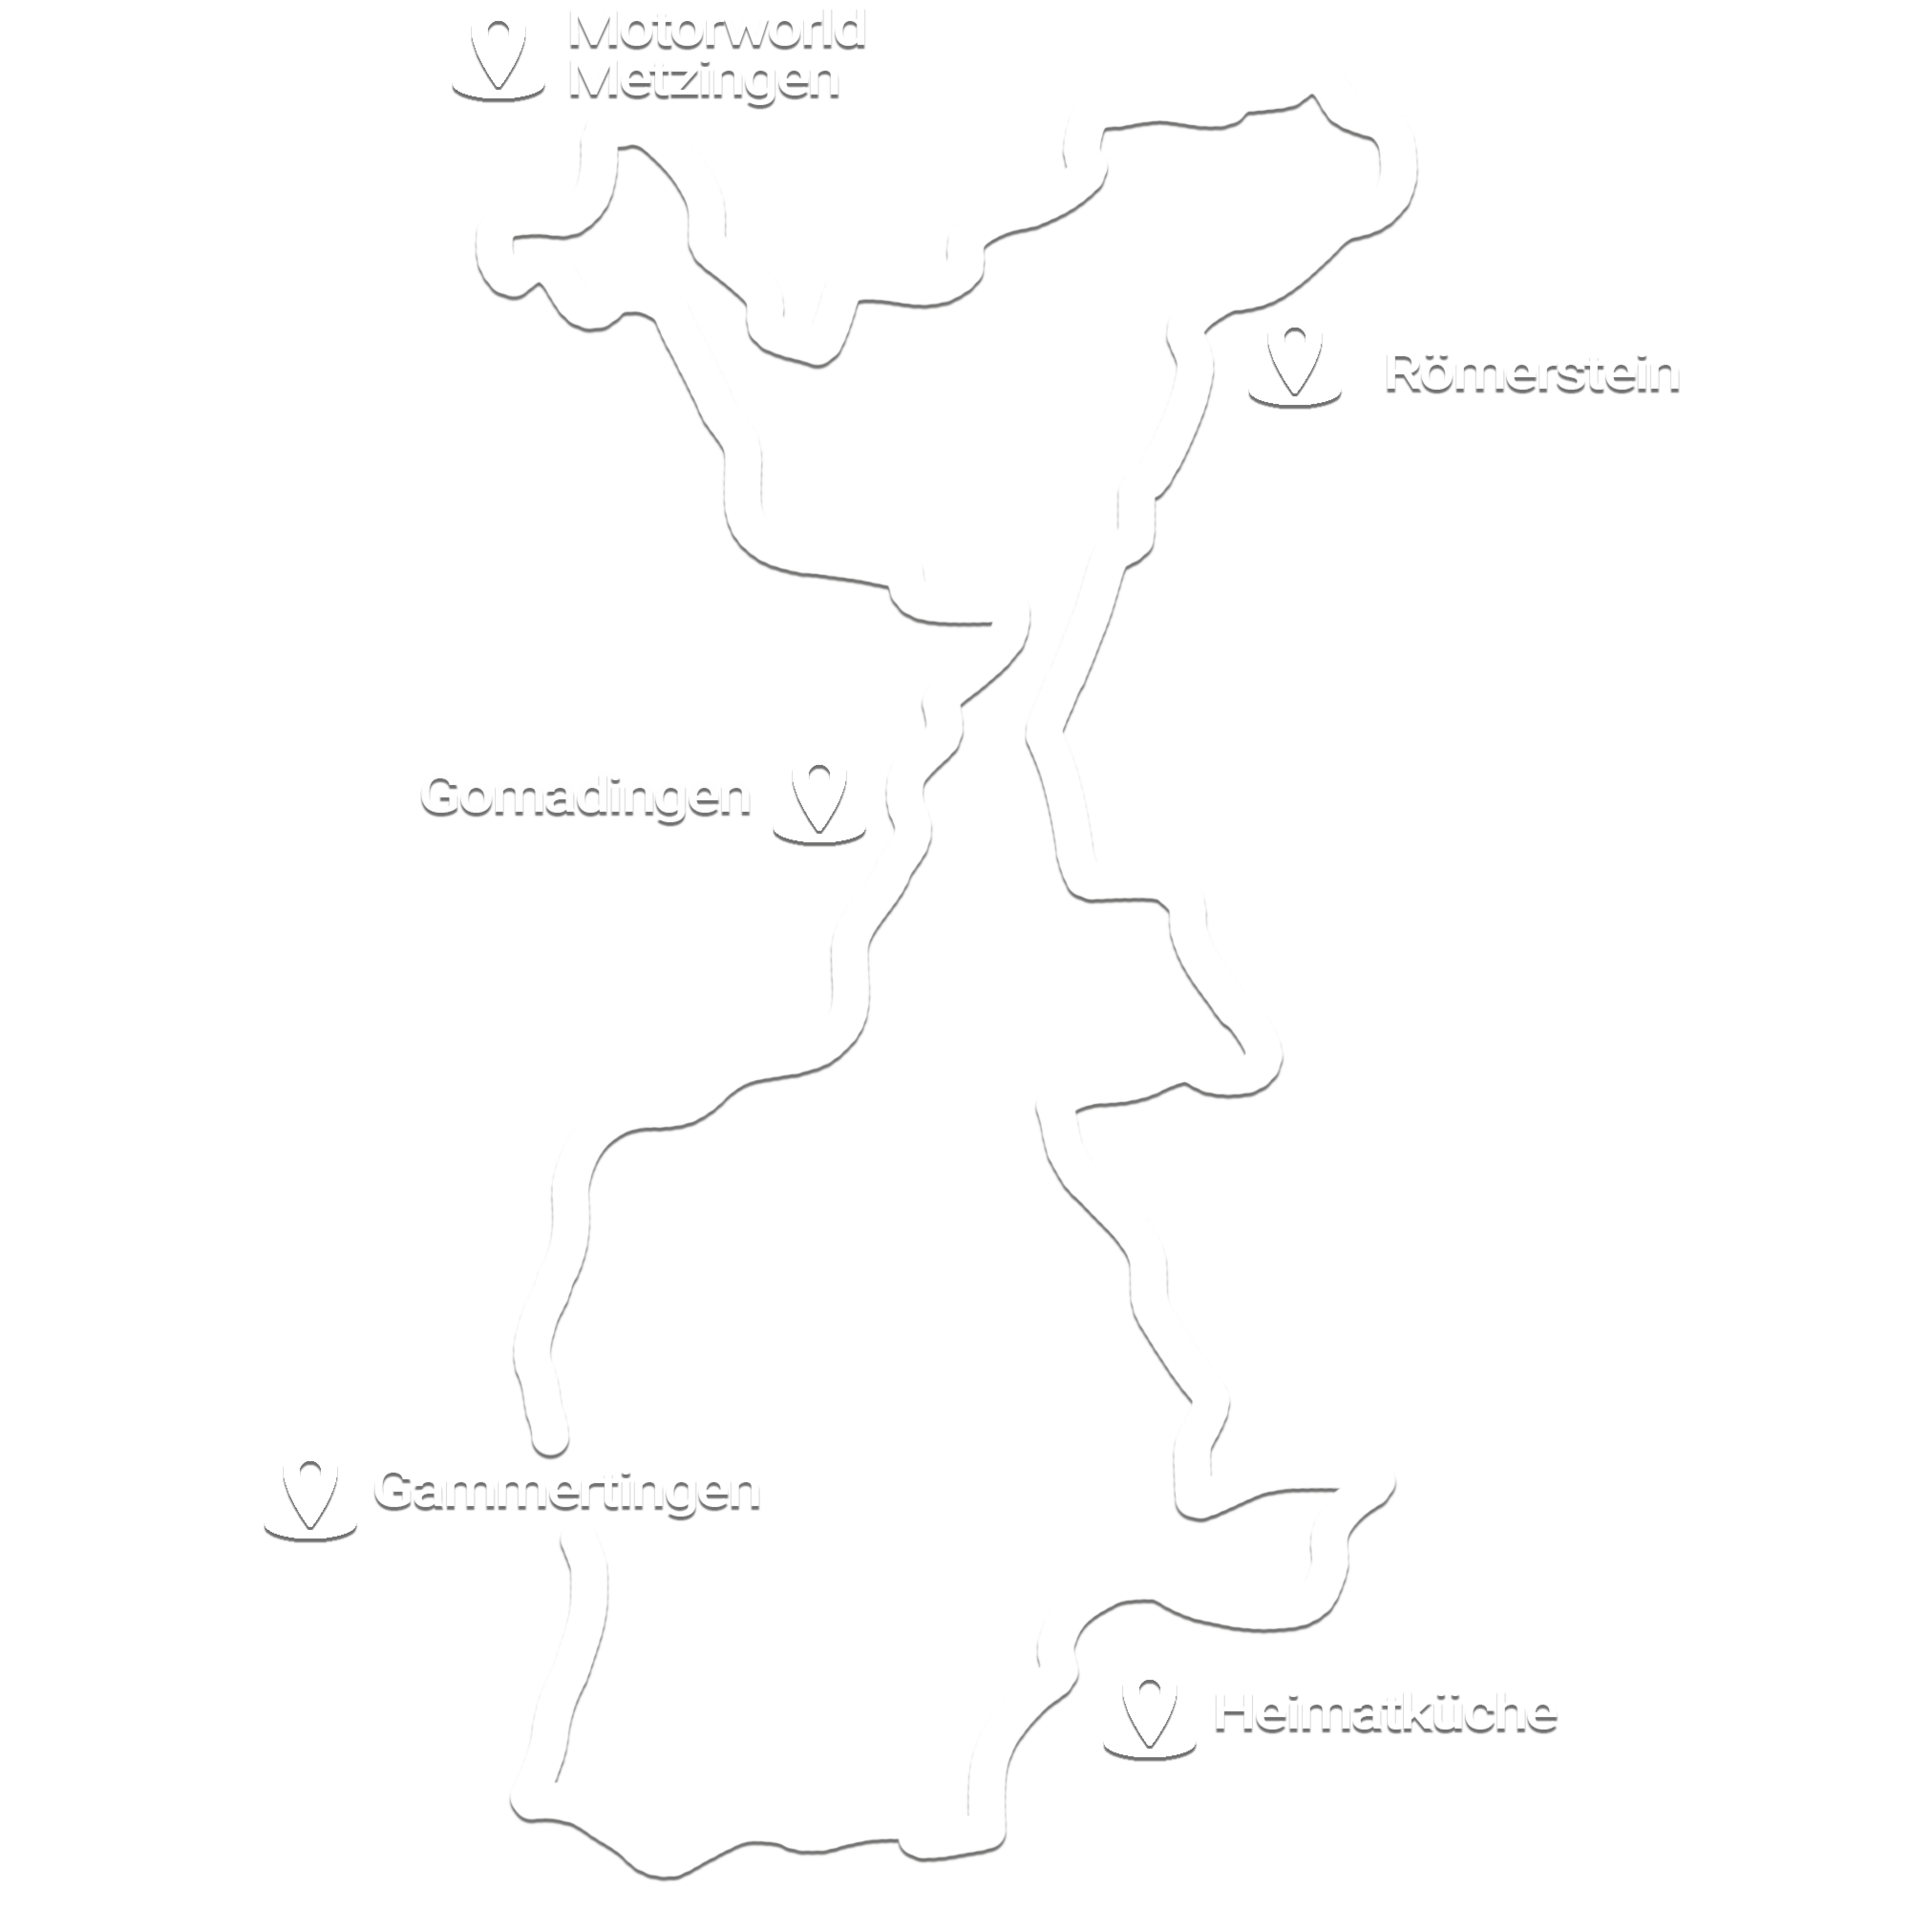 Oldtimer Rallye Route